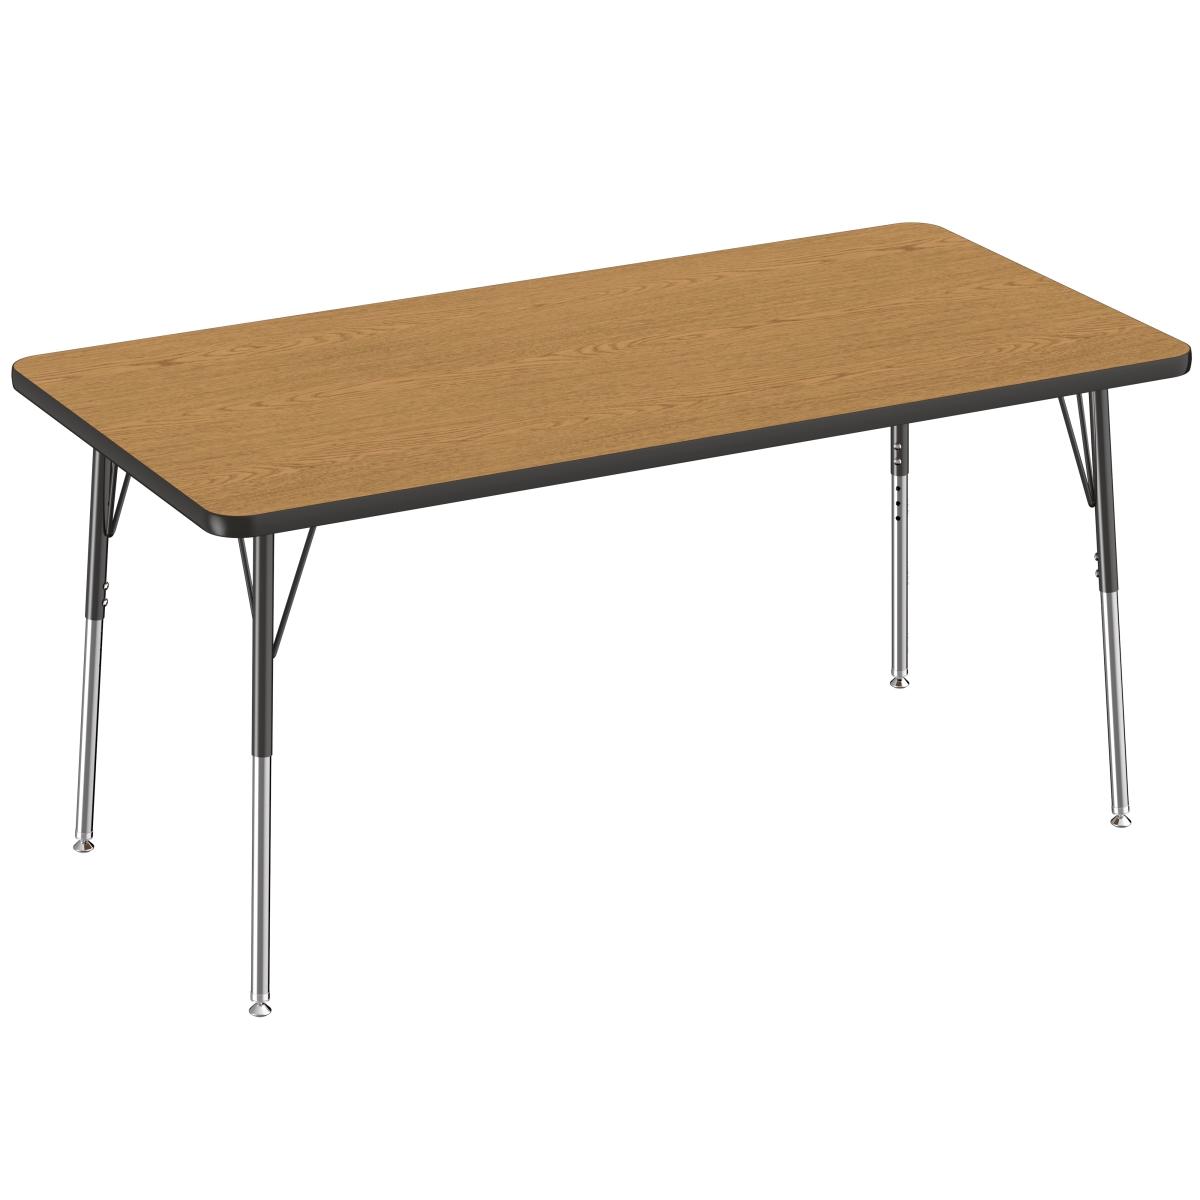 10023-okbk 30 X 60 In. Rectangle T-mold Adjustable Activity Table With Standard Swivel - Oak & Black